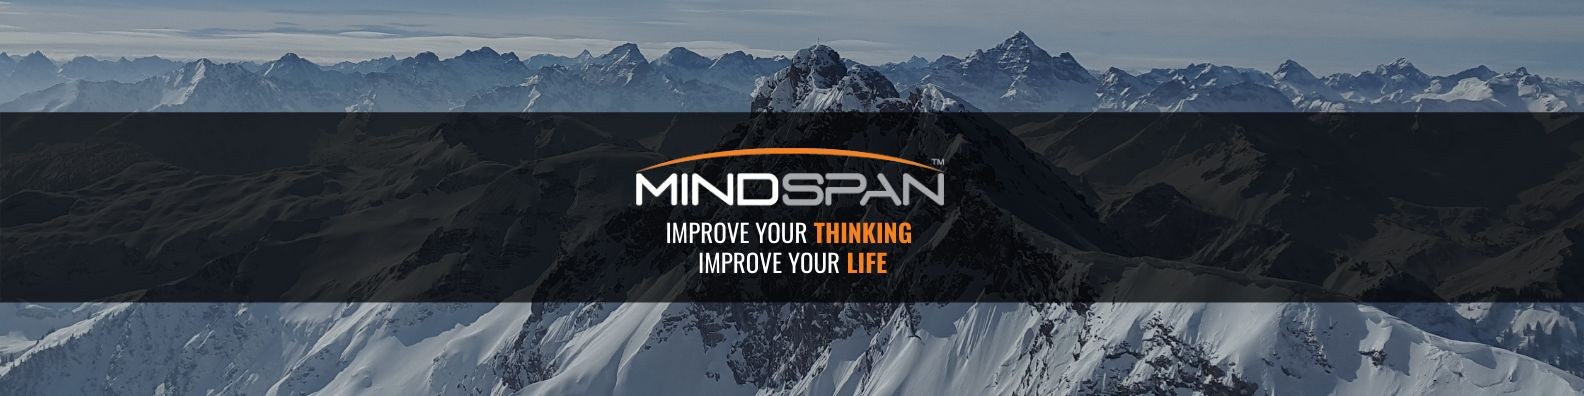 mindspan-franchise-cover-WN